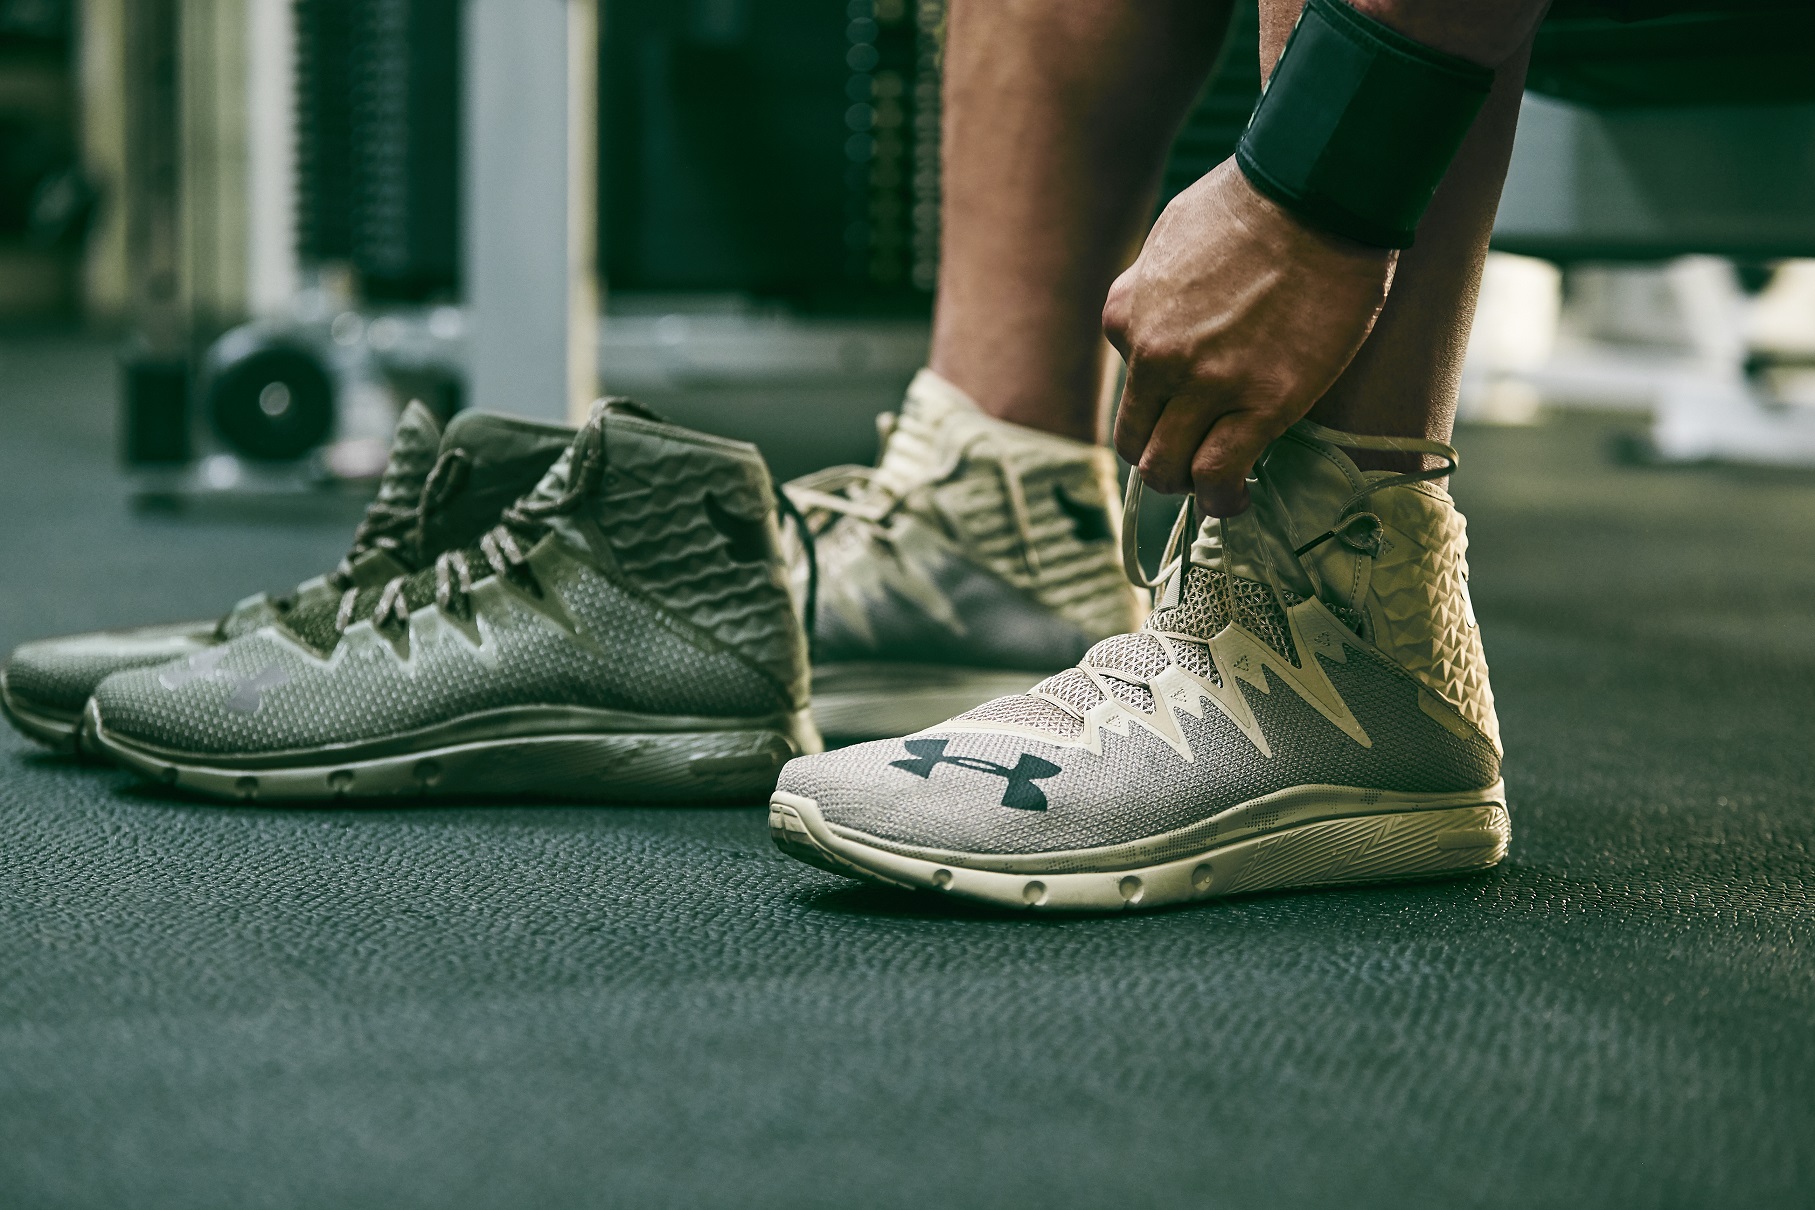 Rock Delta鞋款包含米白色的海軍陸戰隊配色與軍綠色系的陸軍配色，向在戰場的英雄致敬